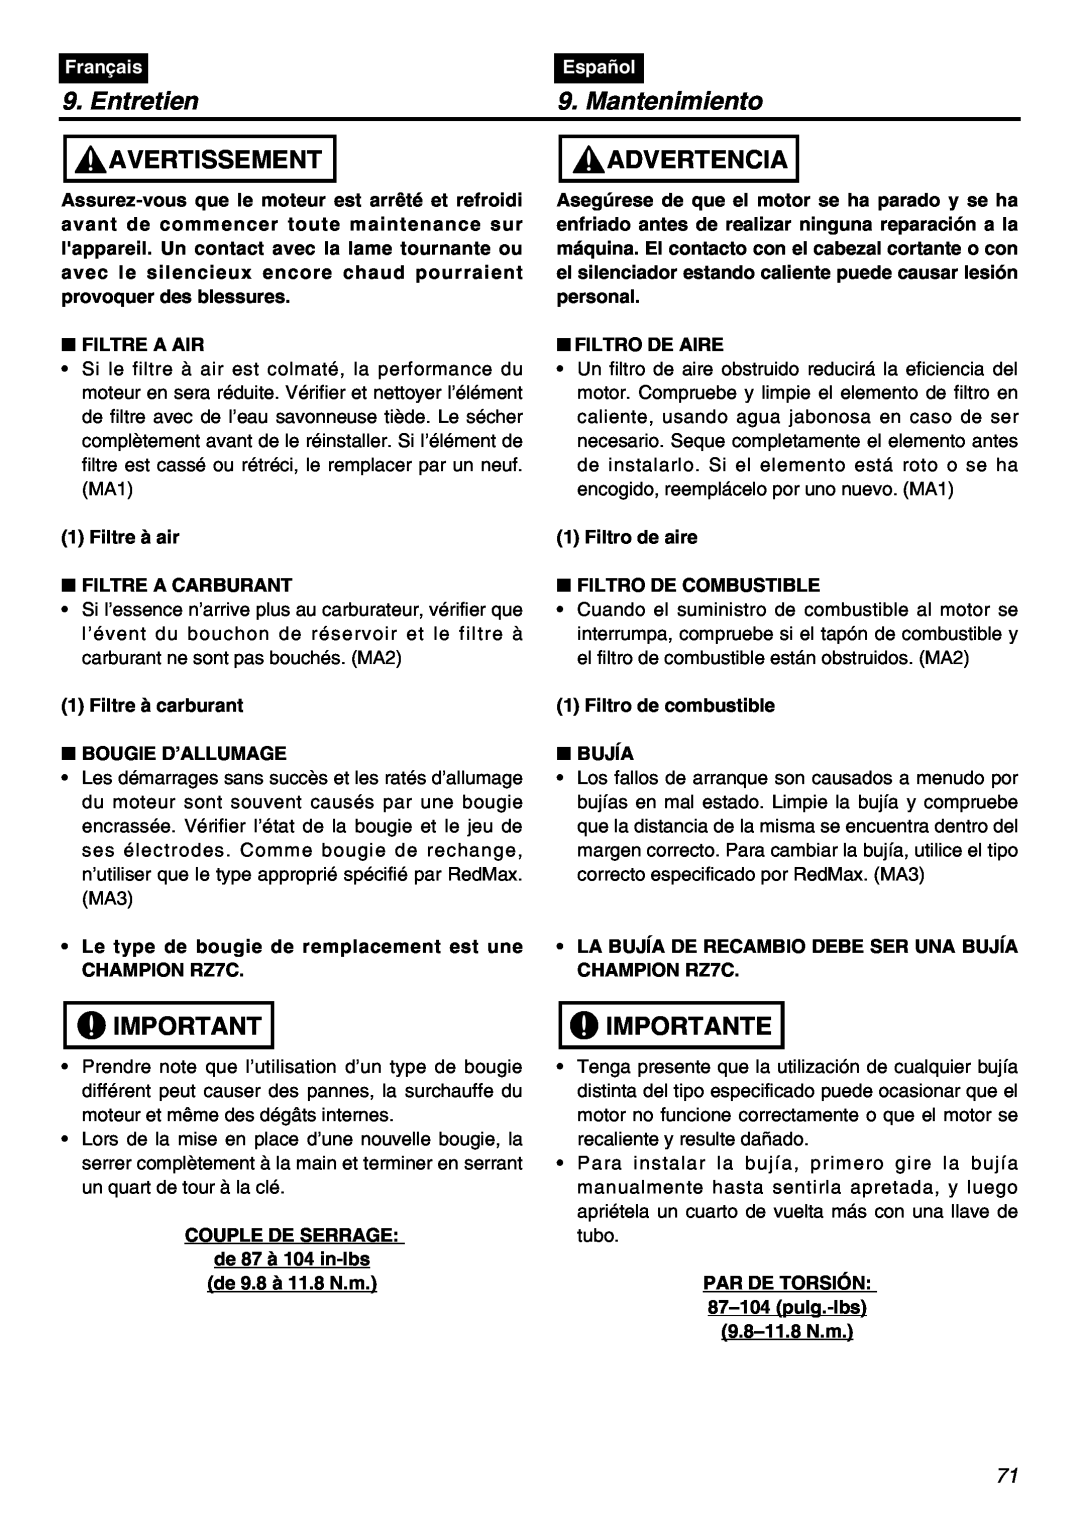 Zenoah EXZ2401S manual Mantenimiento, Entretien, Avertissement, Advertencia, Importante, Français, Español 